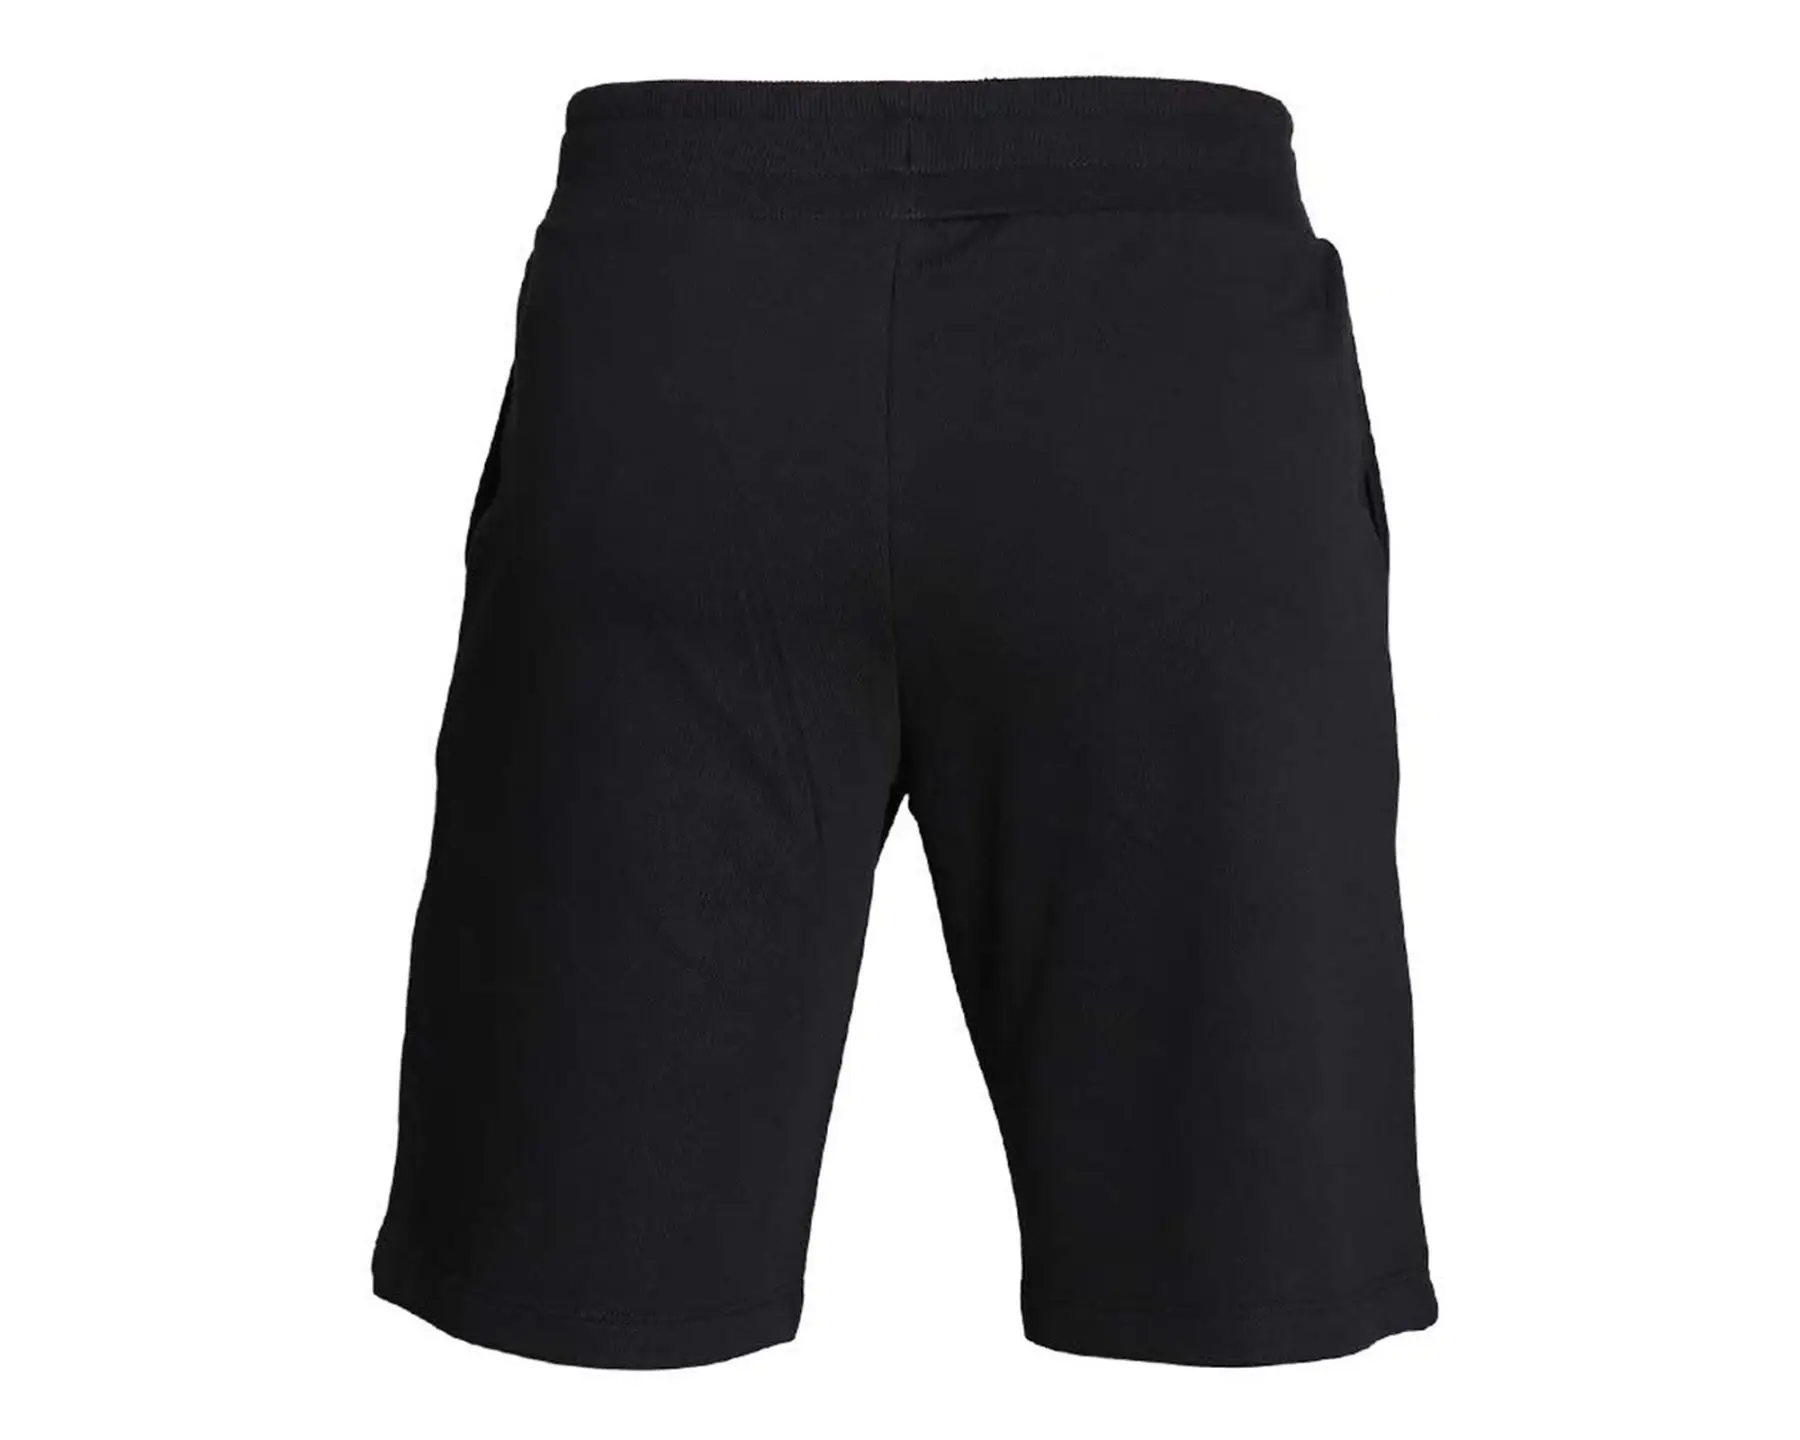 Hummel Original men's Casual Shorts Black Color Comfortable Shorts for Sporty and Comfortable Walking Elastic Waist Structure